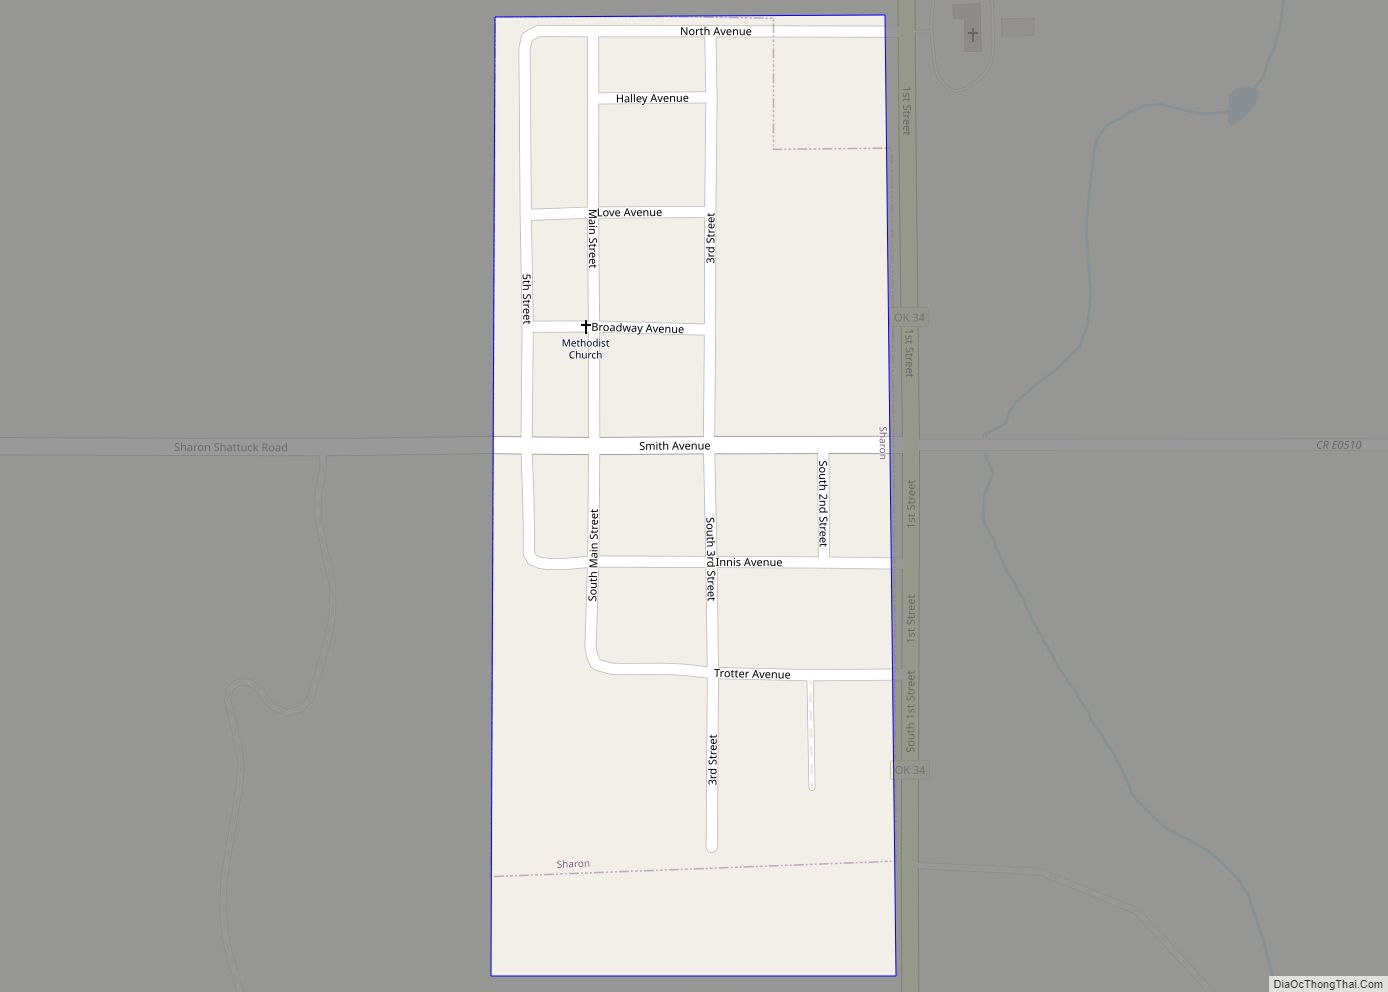 Map of Sharon town, Oklahoma